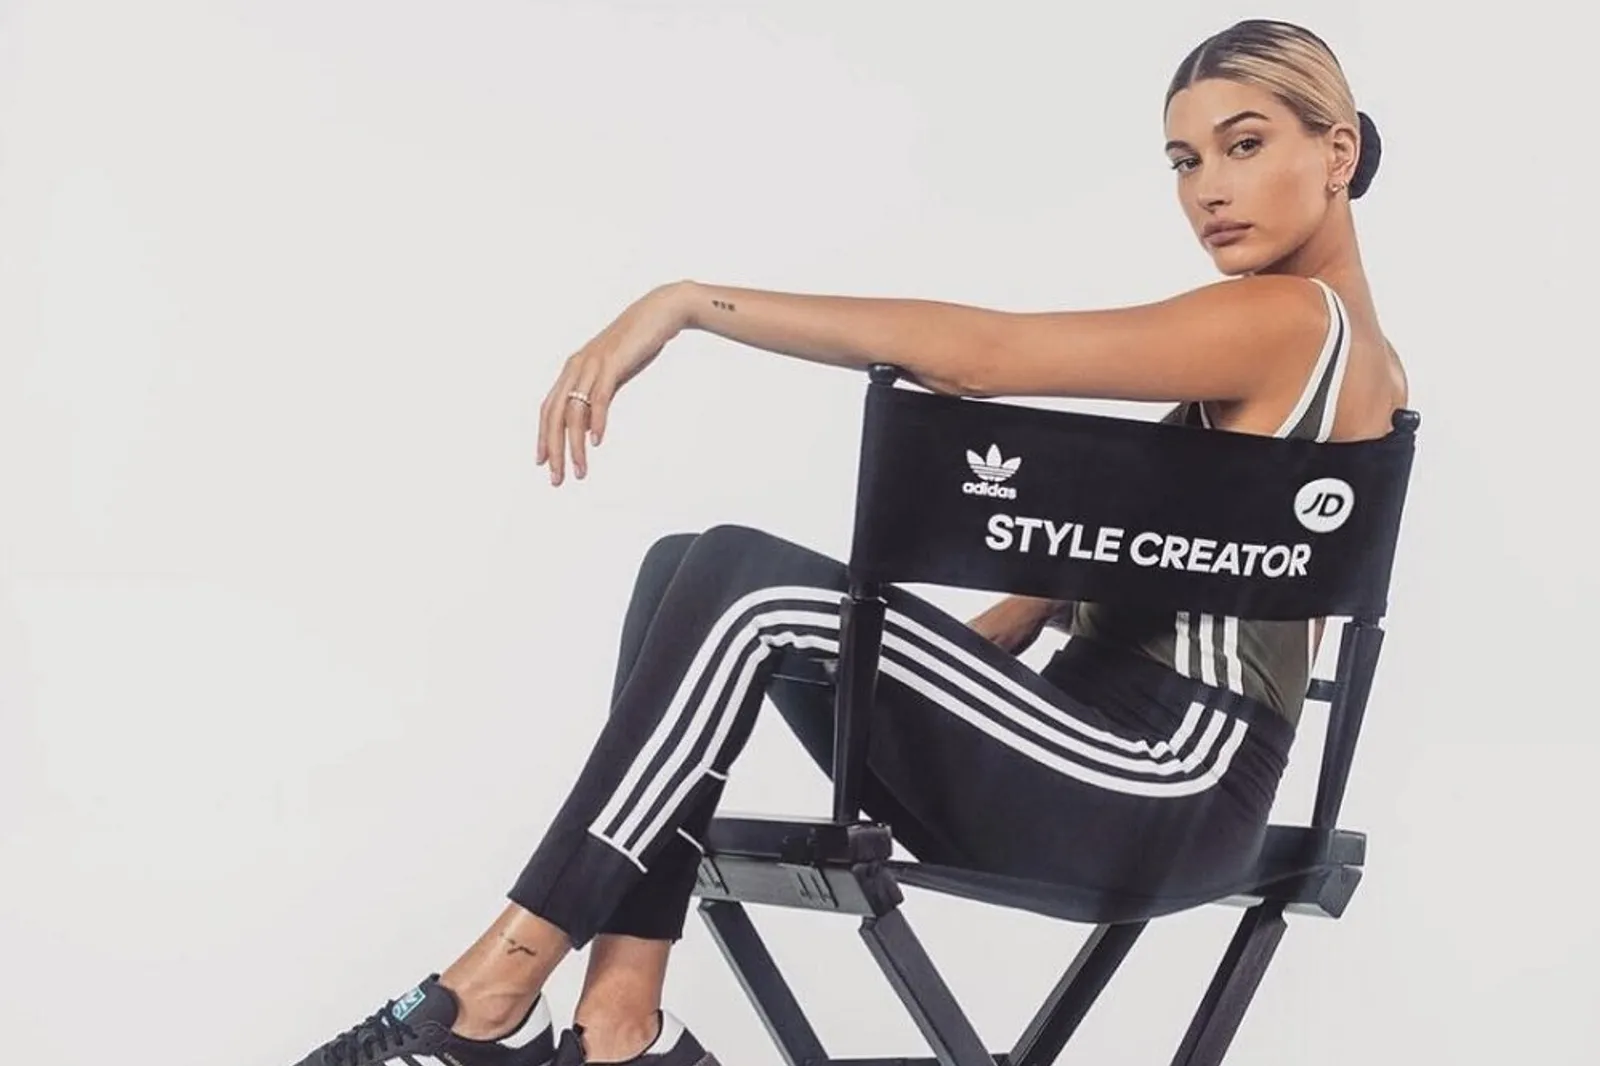 Hailey Baldwin Terpilih Menjadi 'Style Creator' Adidas di JD Sports